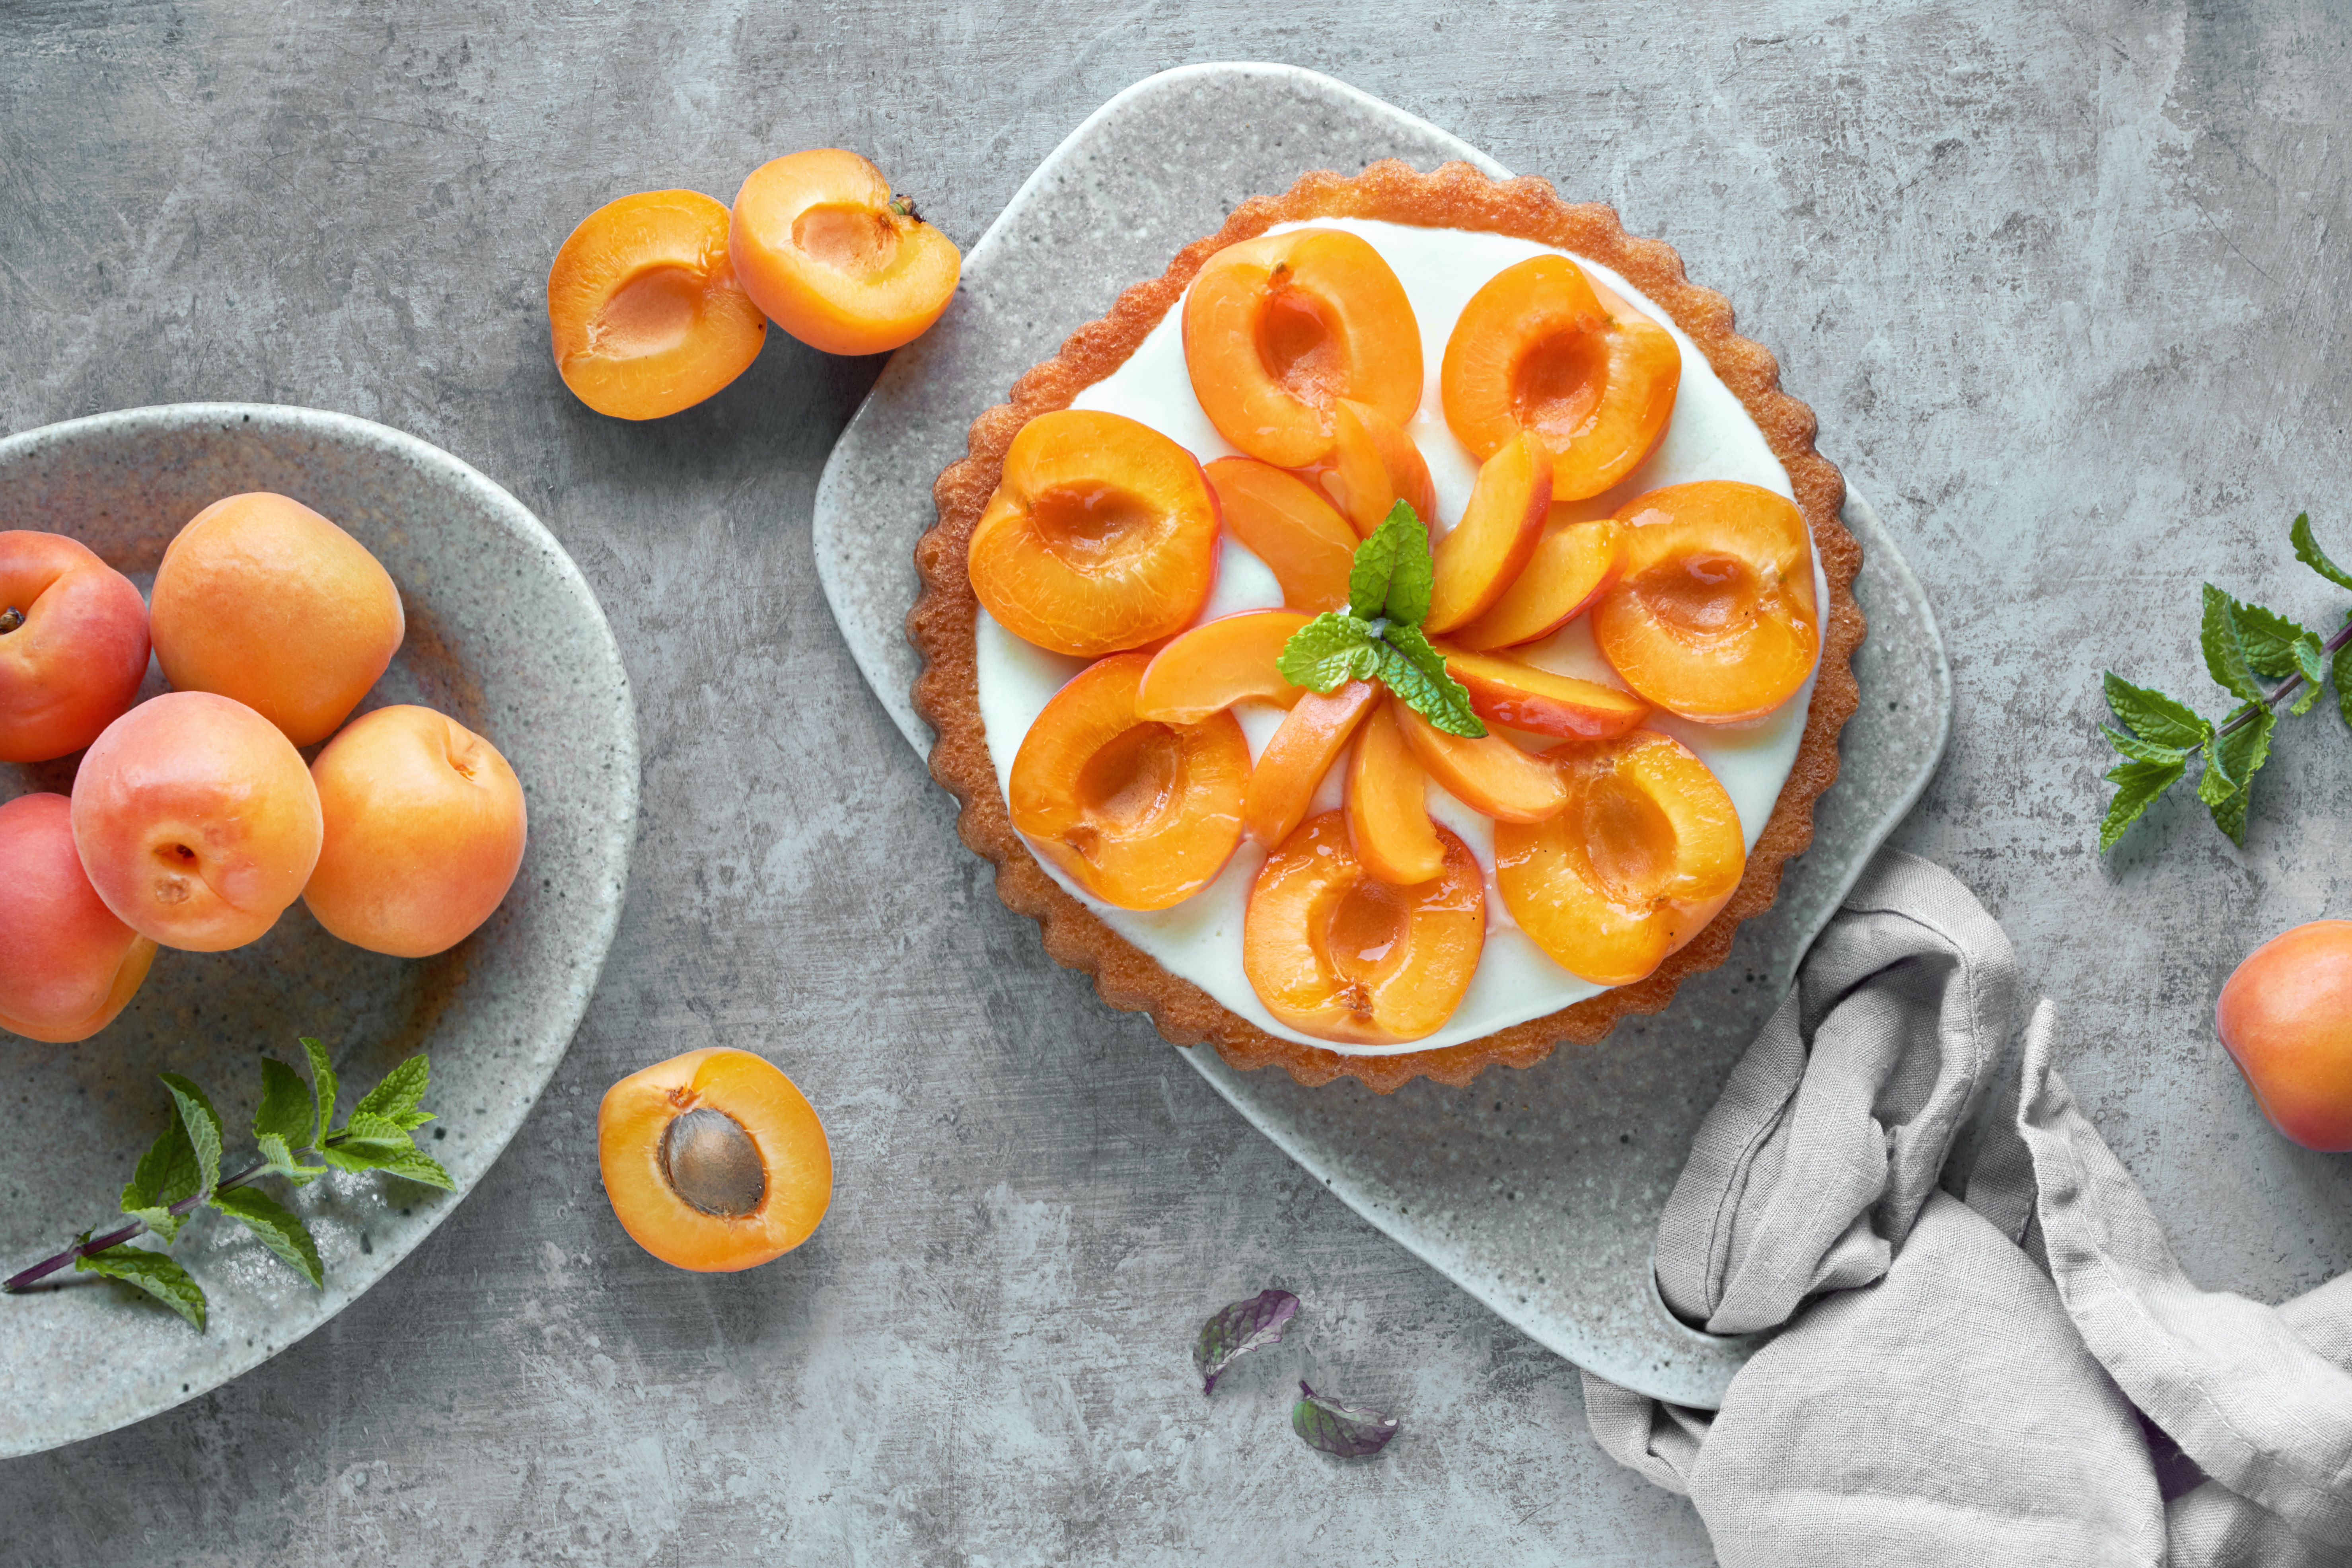 Персики на тарелке